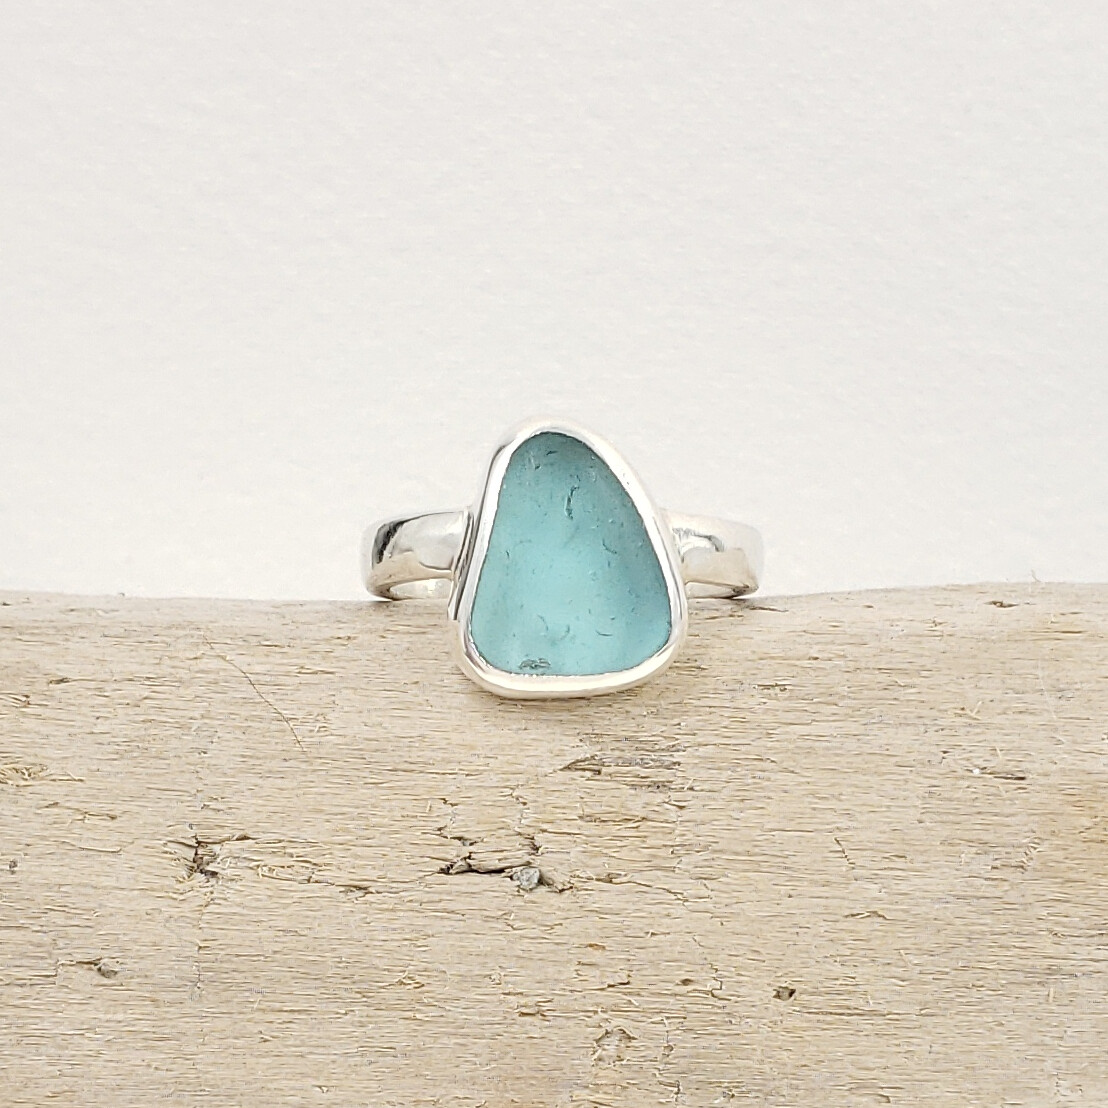 Light Blue Lake Erie Beach Glass Ring - size 5